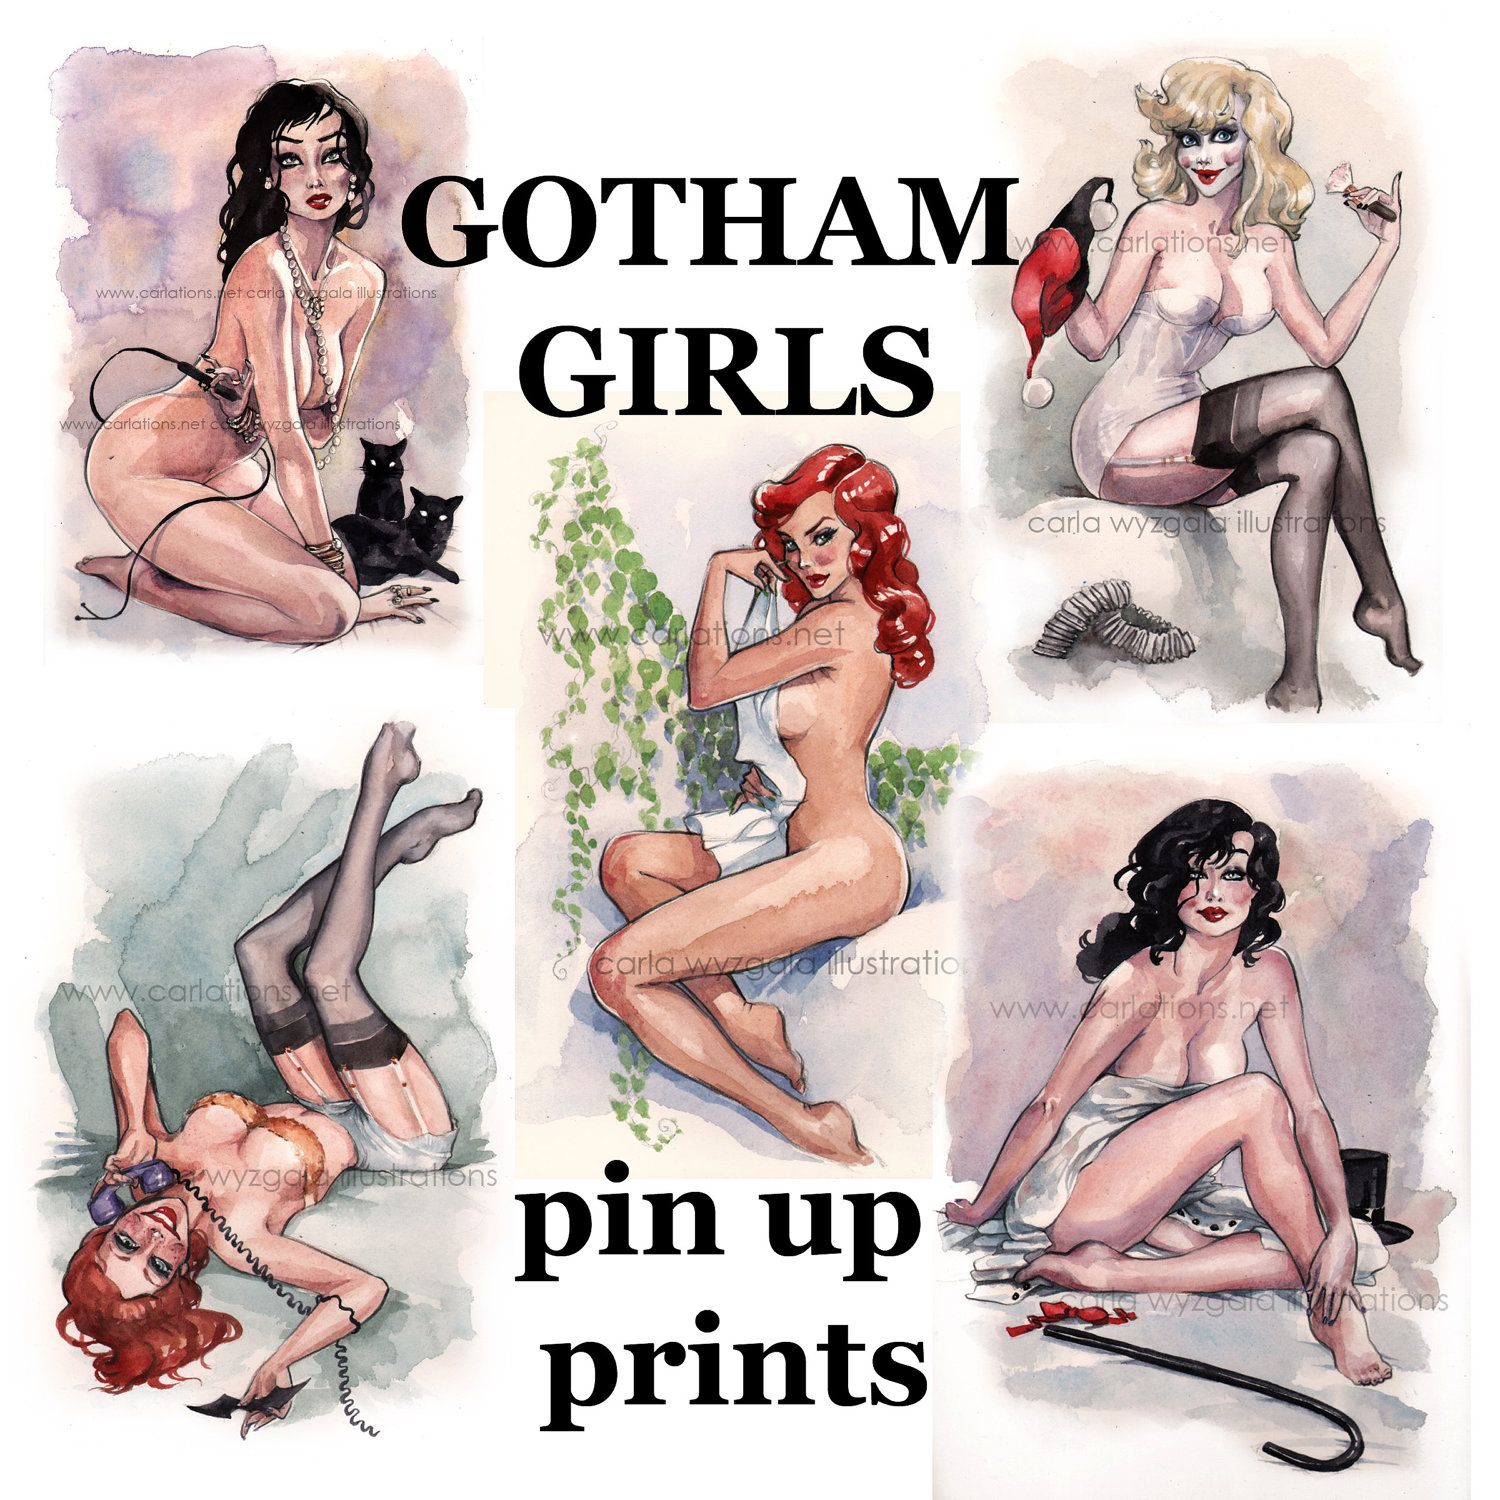 batman pin up prints carlationsart on etsy comic